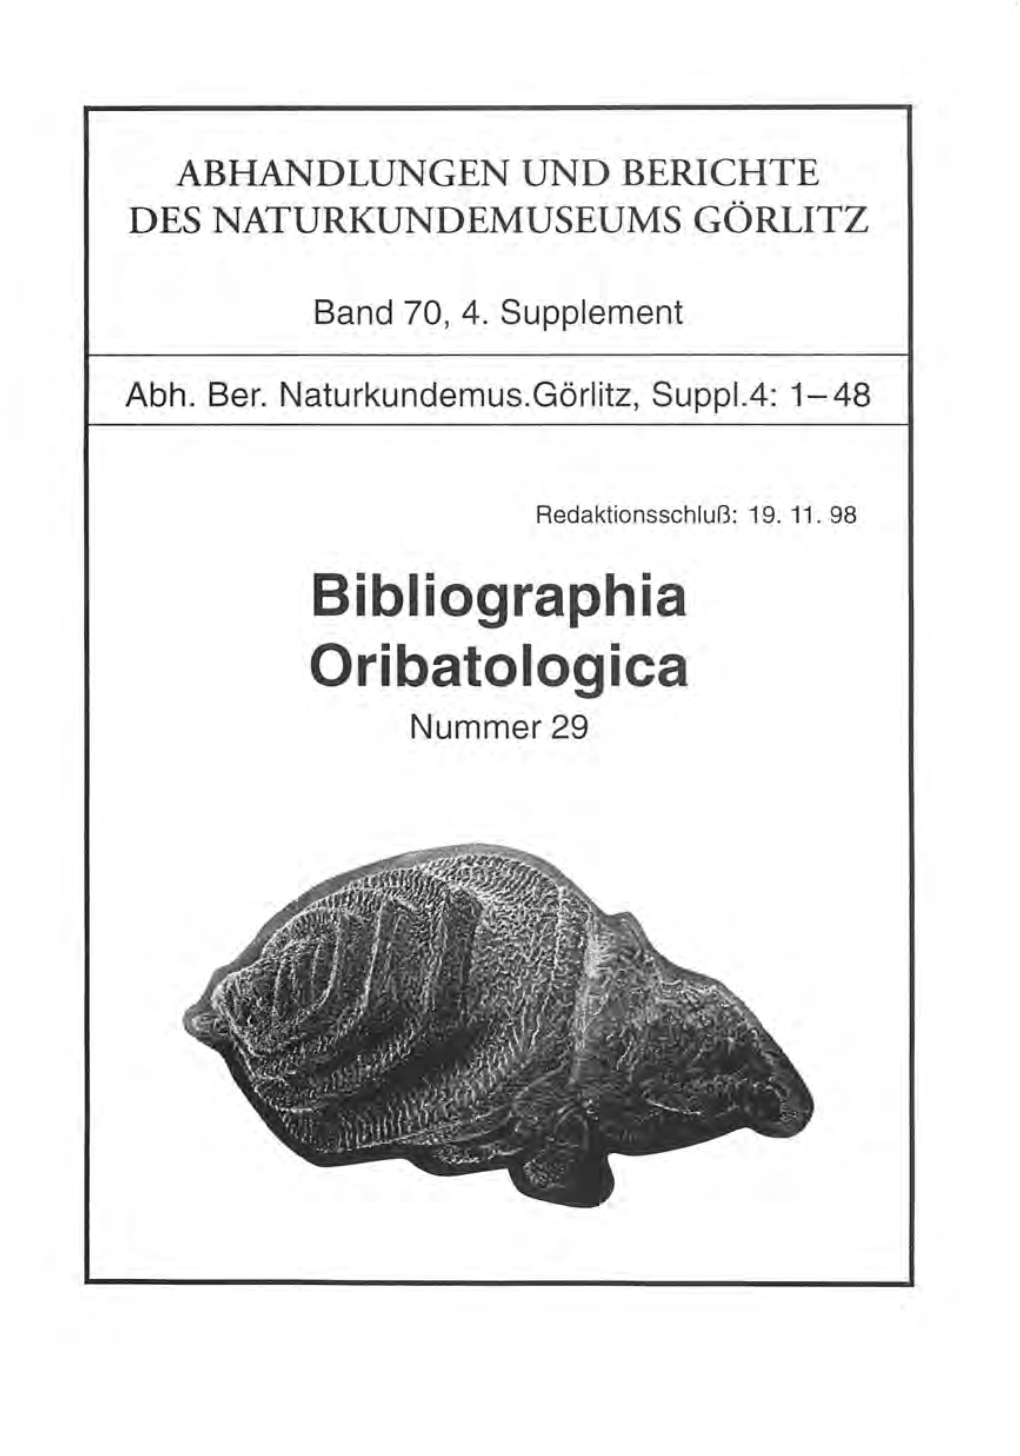 Bibliographia Oribatologica Nummer 29 Contents